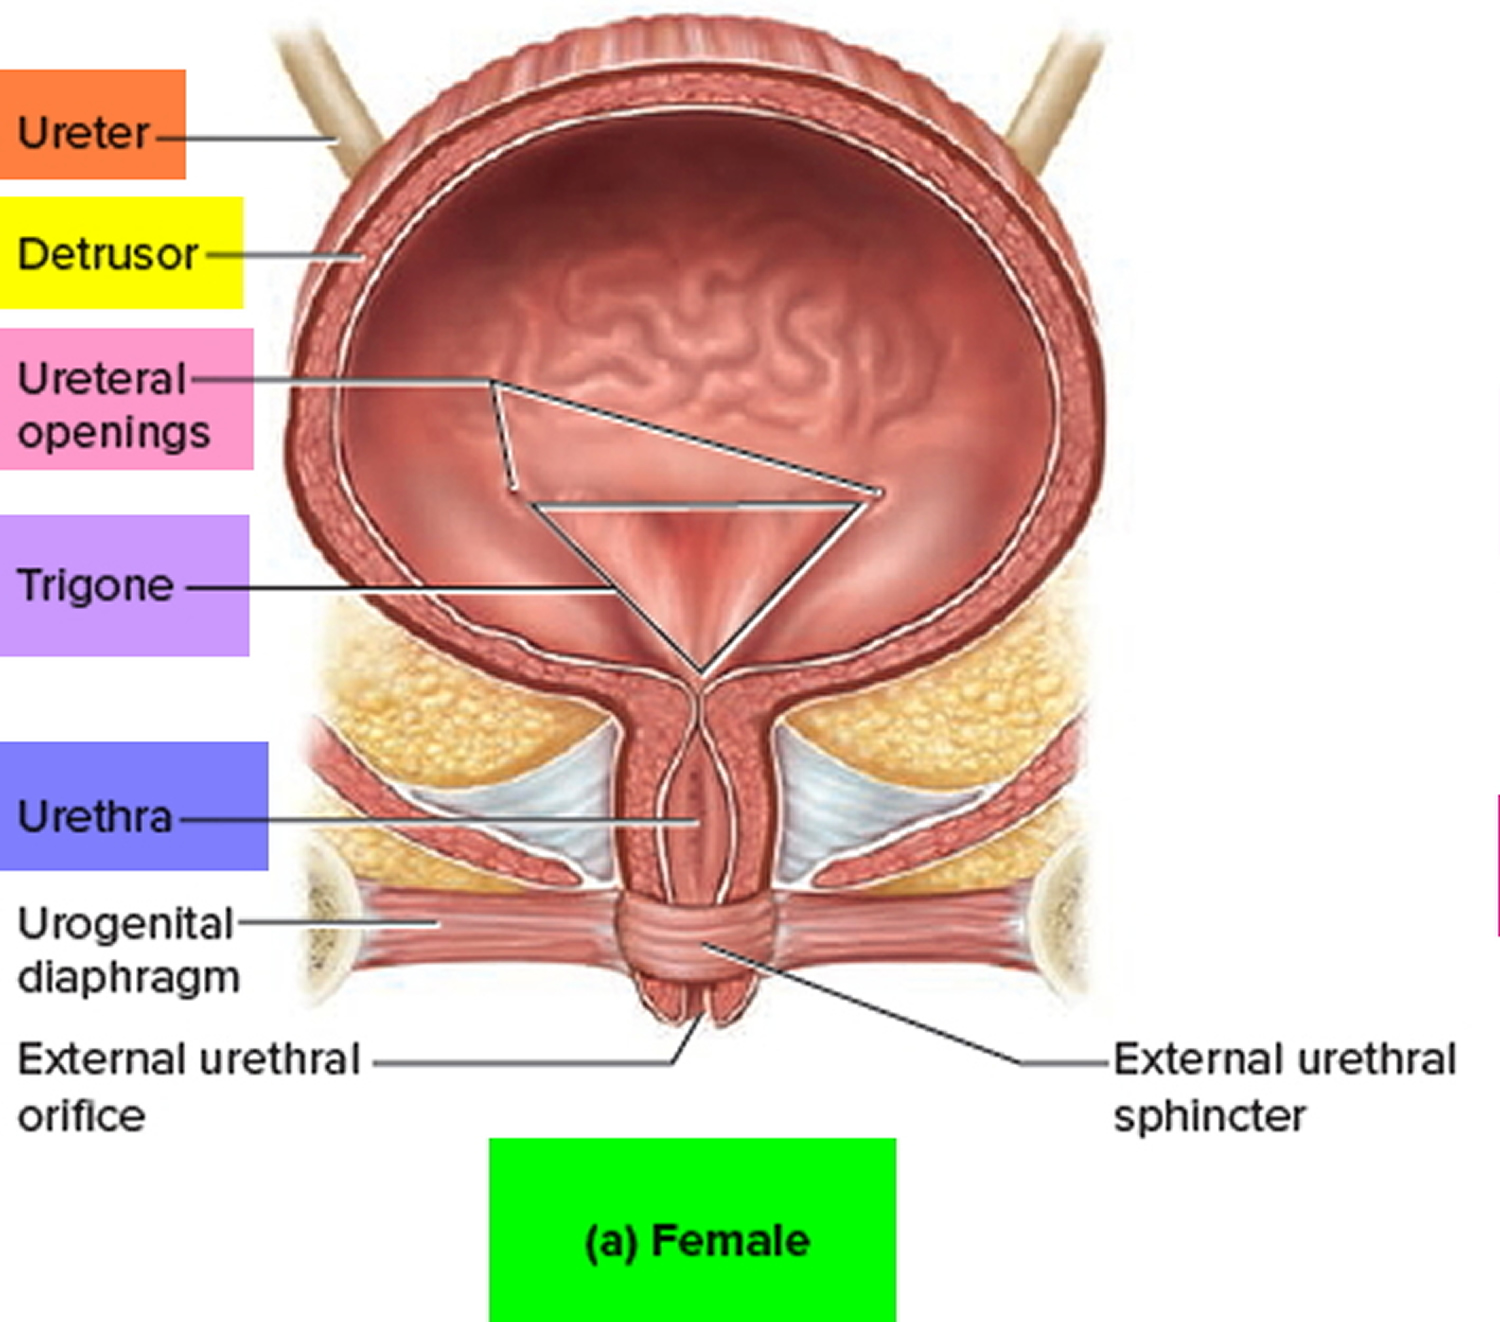 Female urinary bladder anatomy